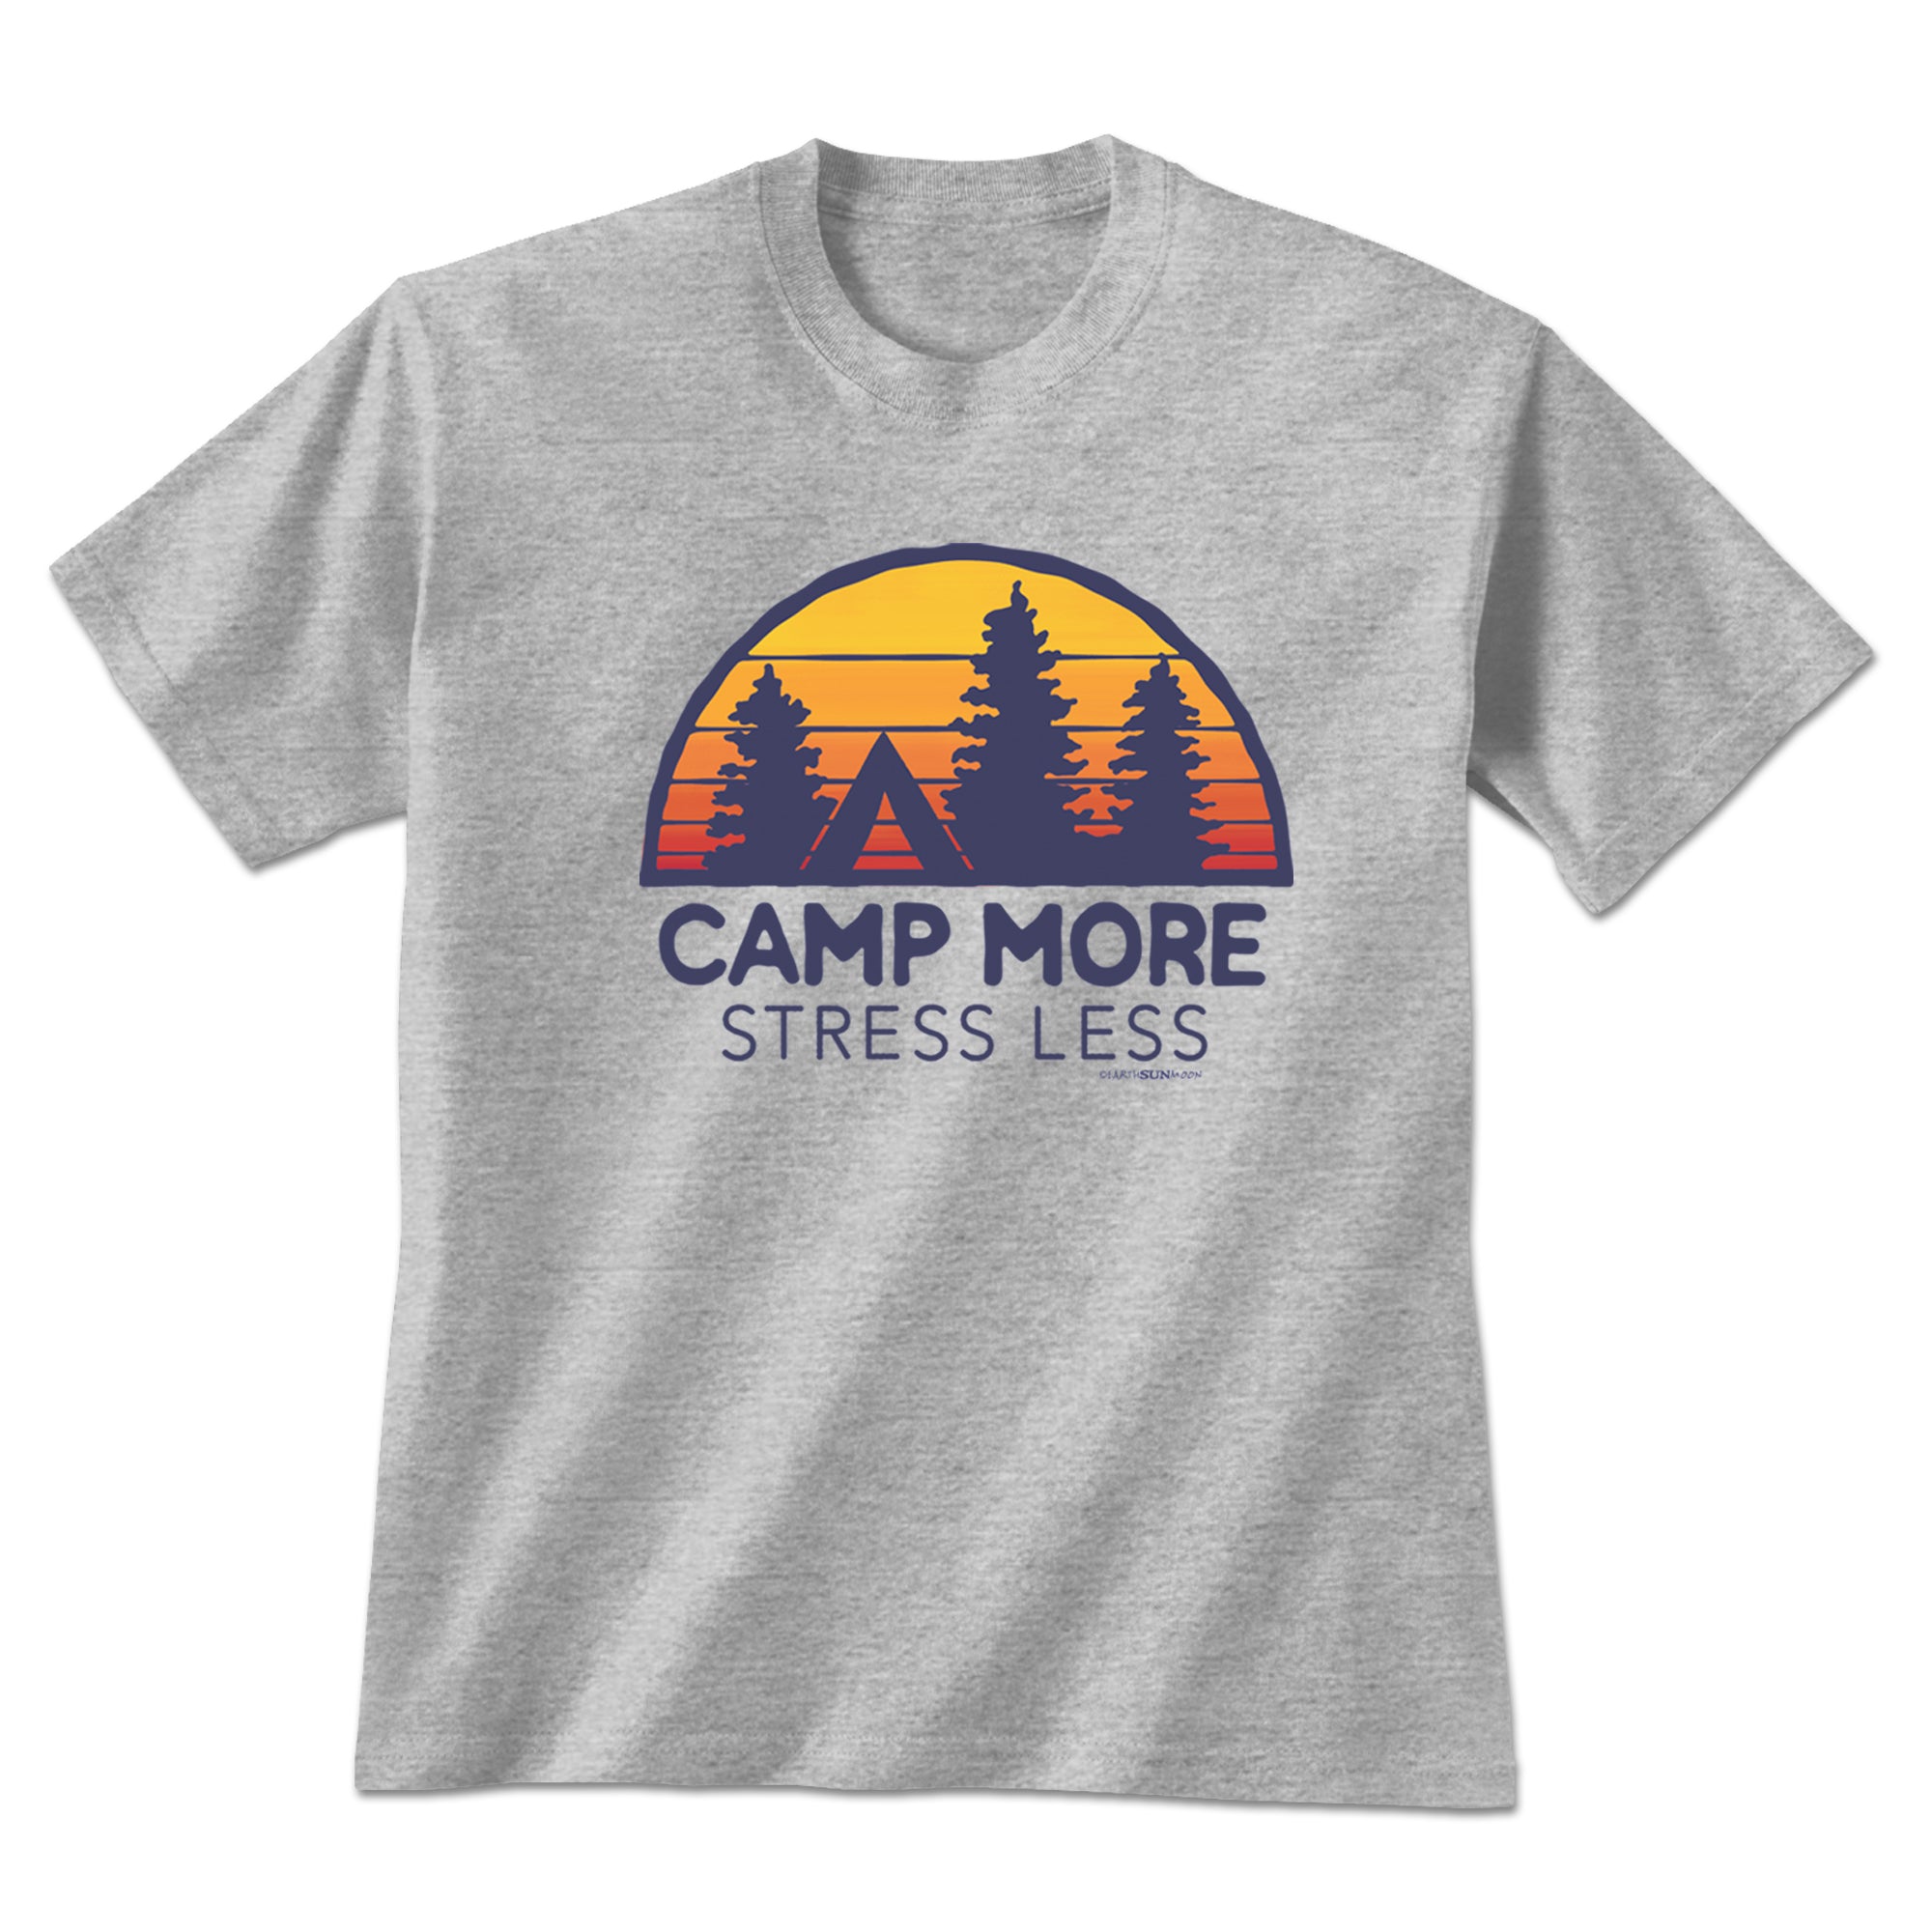 Camp More Stress Less T-Shirt - Sports Grey - Large